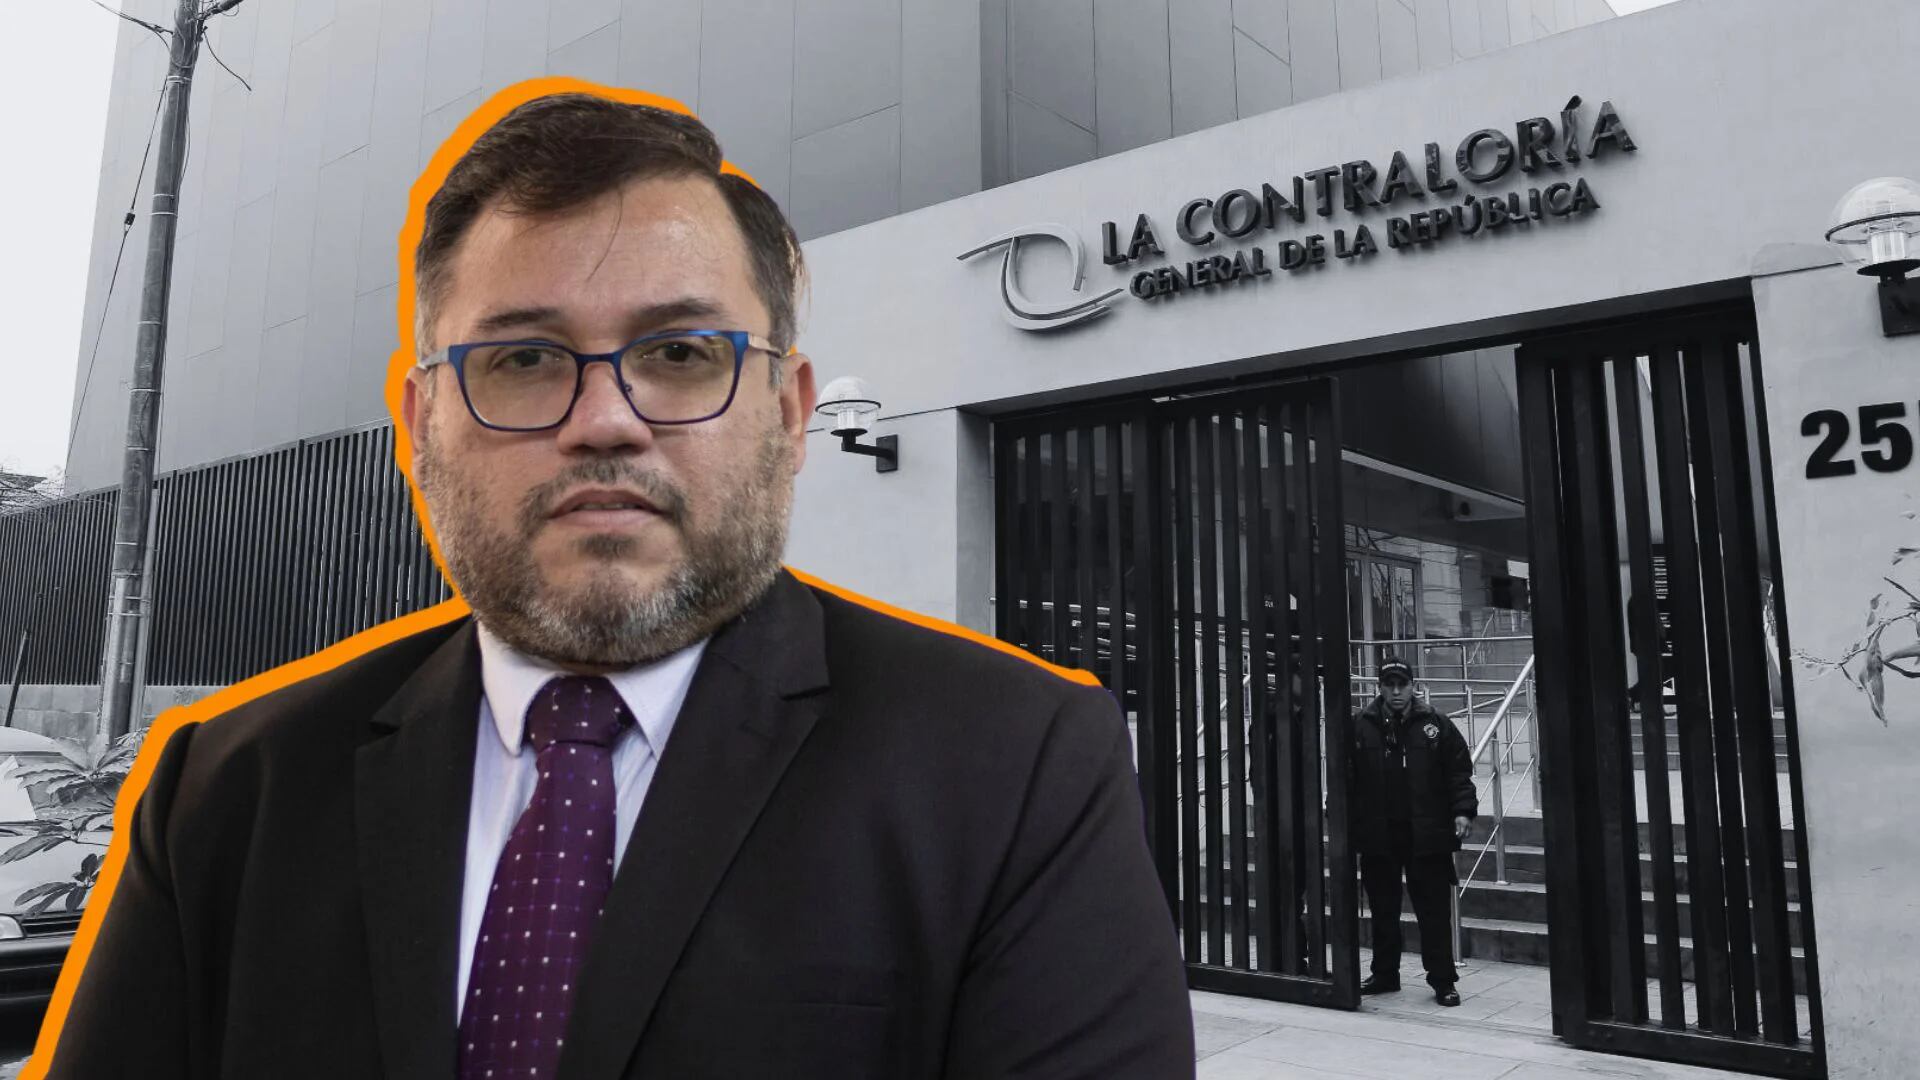 Procurador Daniel Soria responde a informe de Contraloría que advierte sobre su falta de idoneidad